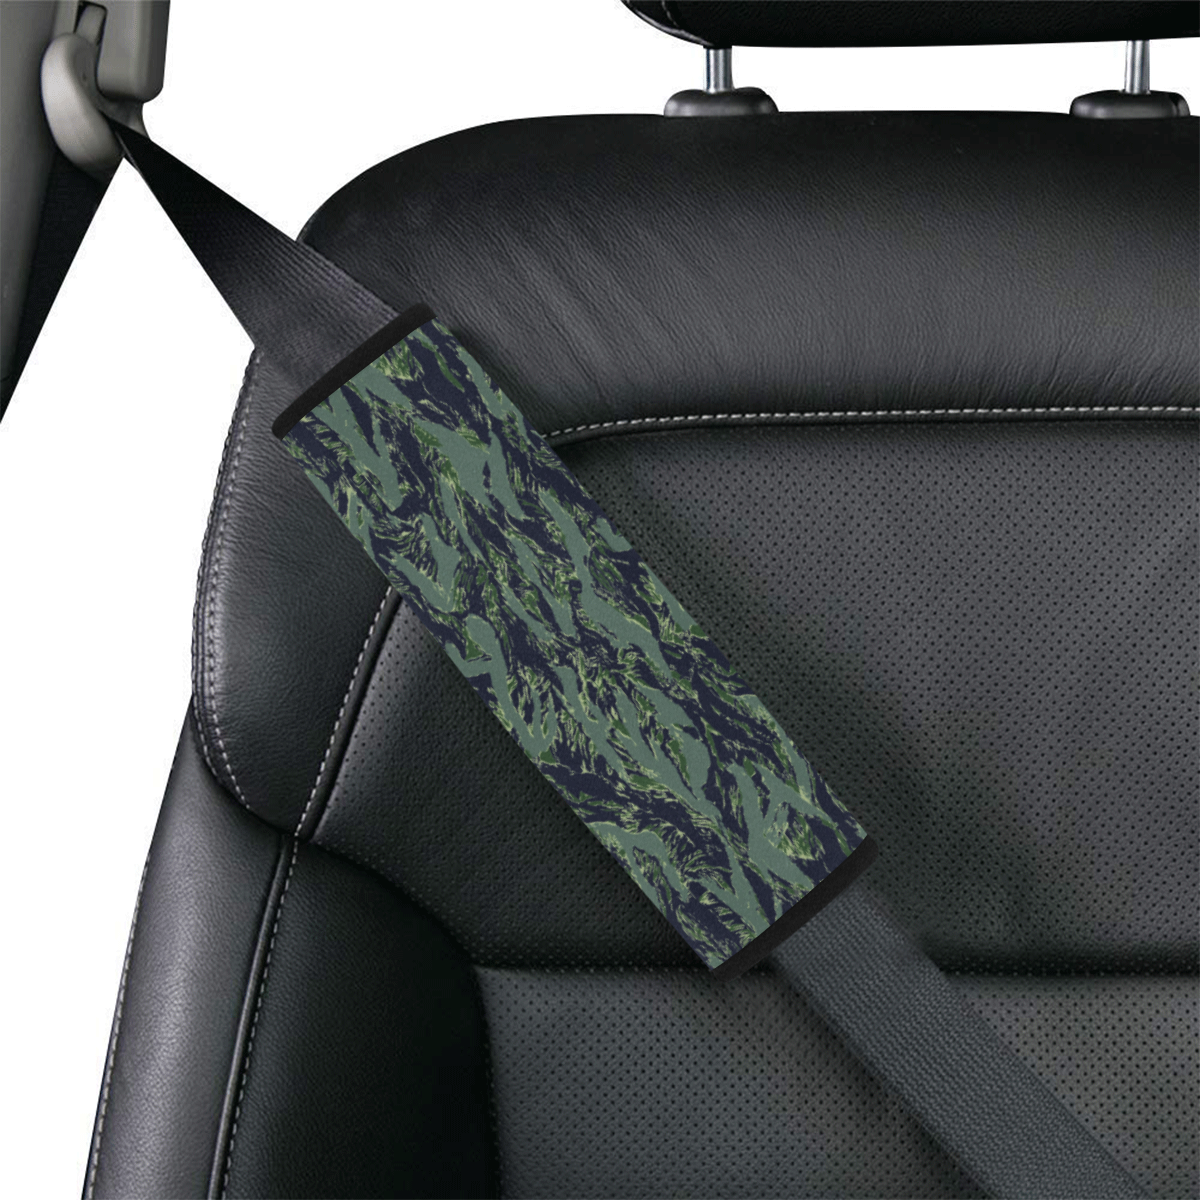 Jungle Tiger Stripe Green Camouflage Car Seat Belt Cover 7''x8.5''